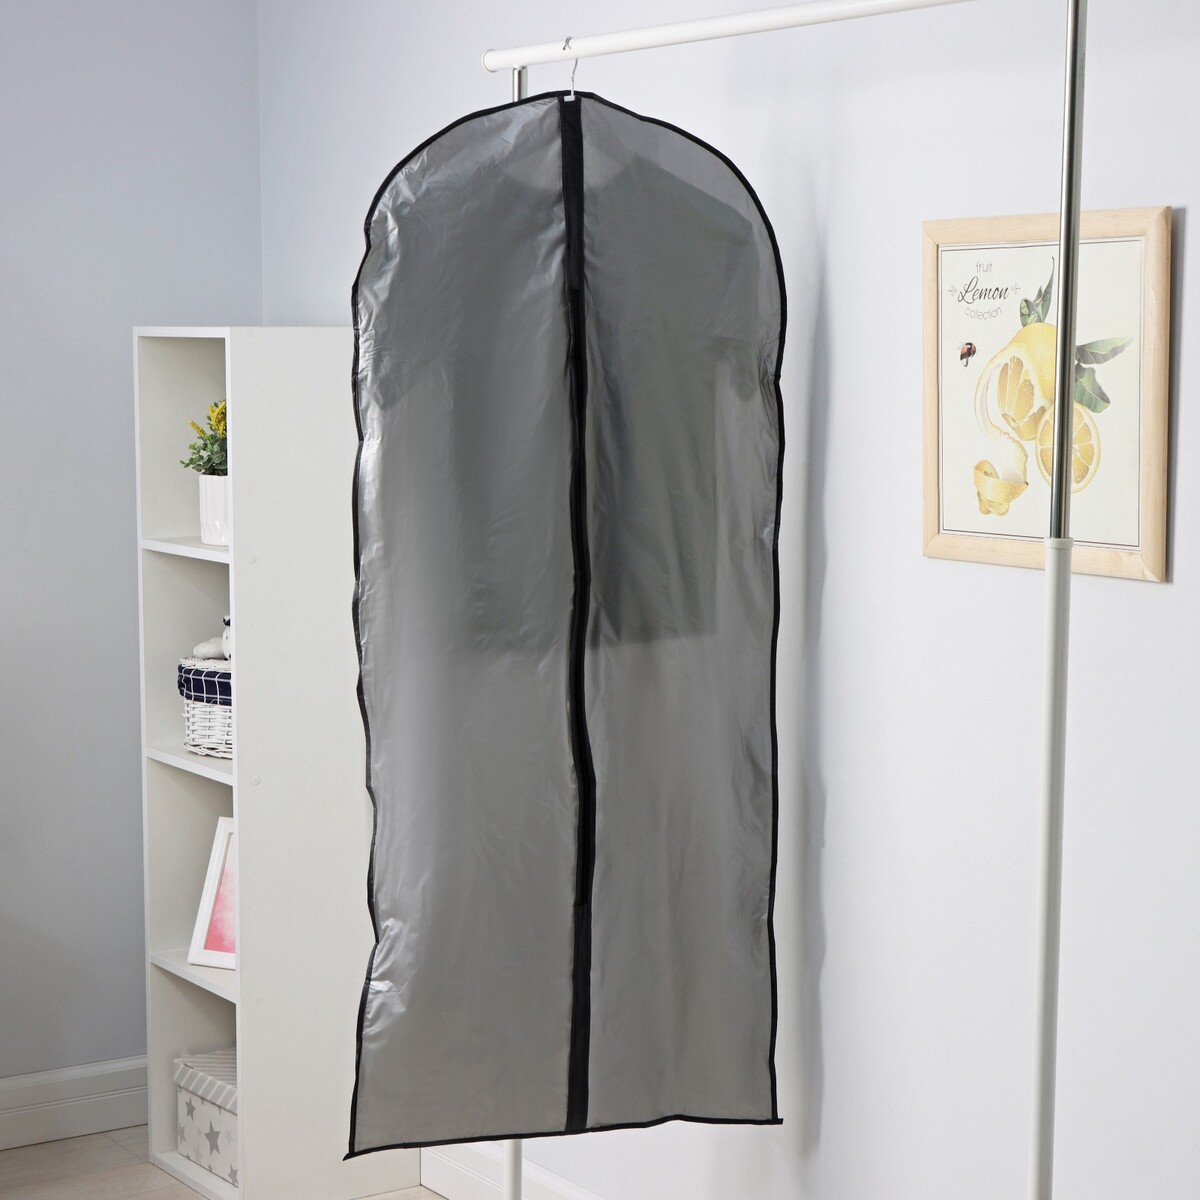 Чехол для одежды доляна, 61×137 см, плотный, peva, цвет серый чехол для одежды ladо́m 60×160 см плотный peva